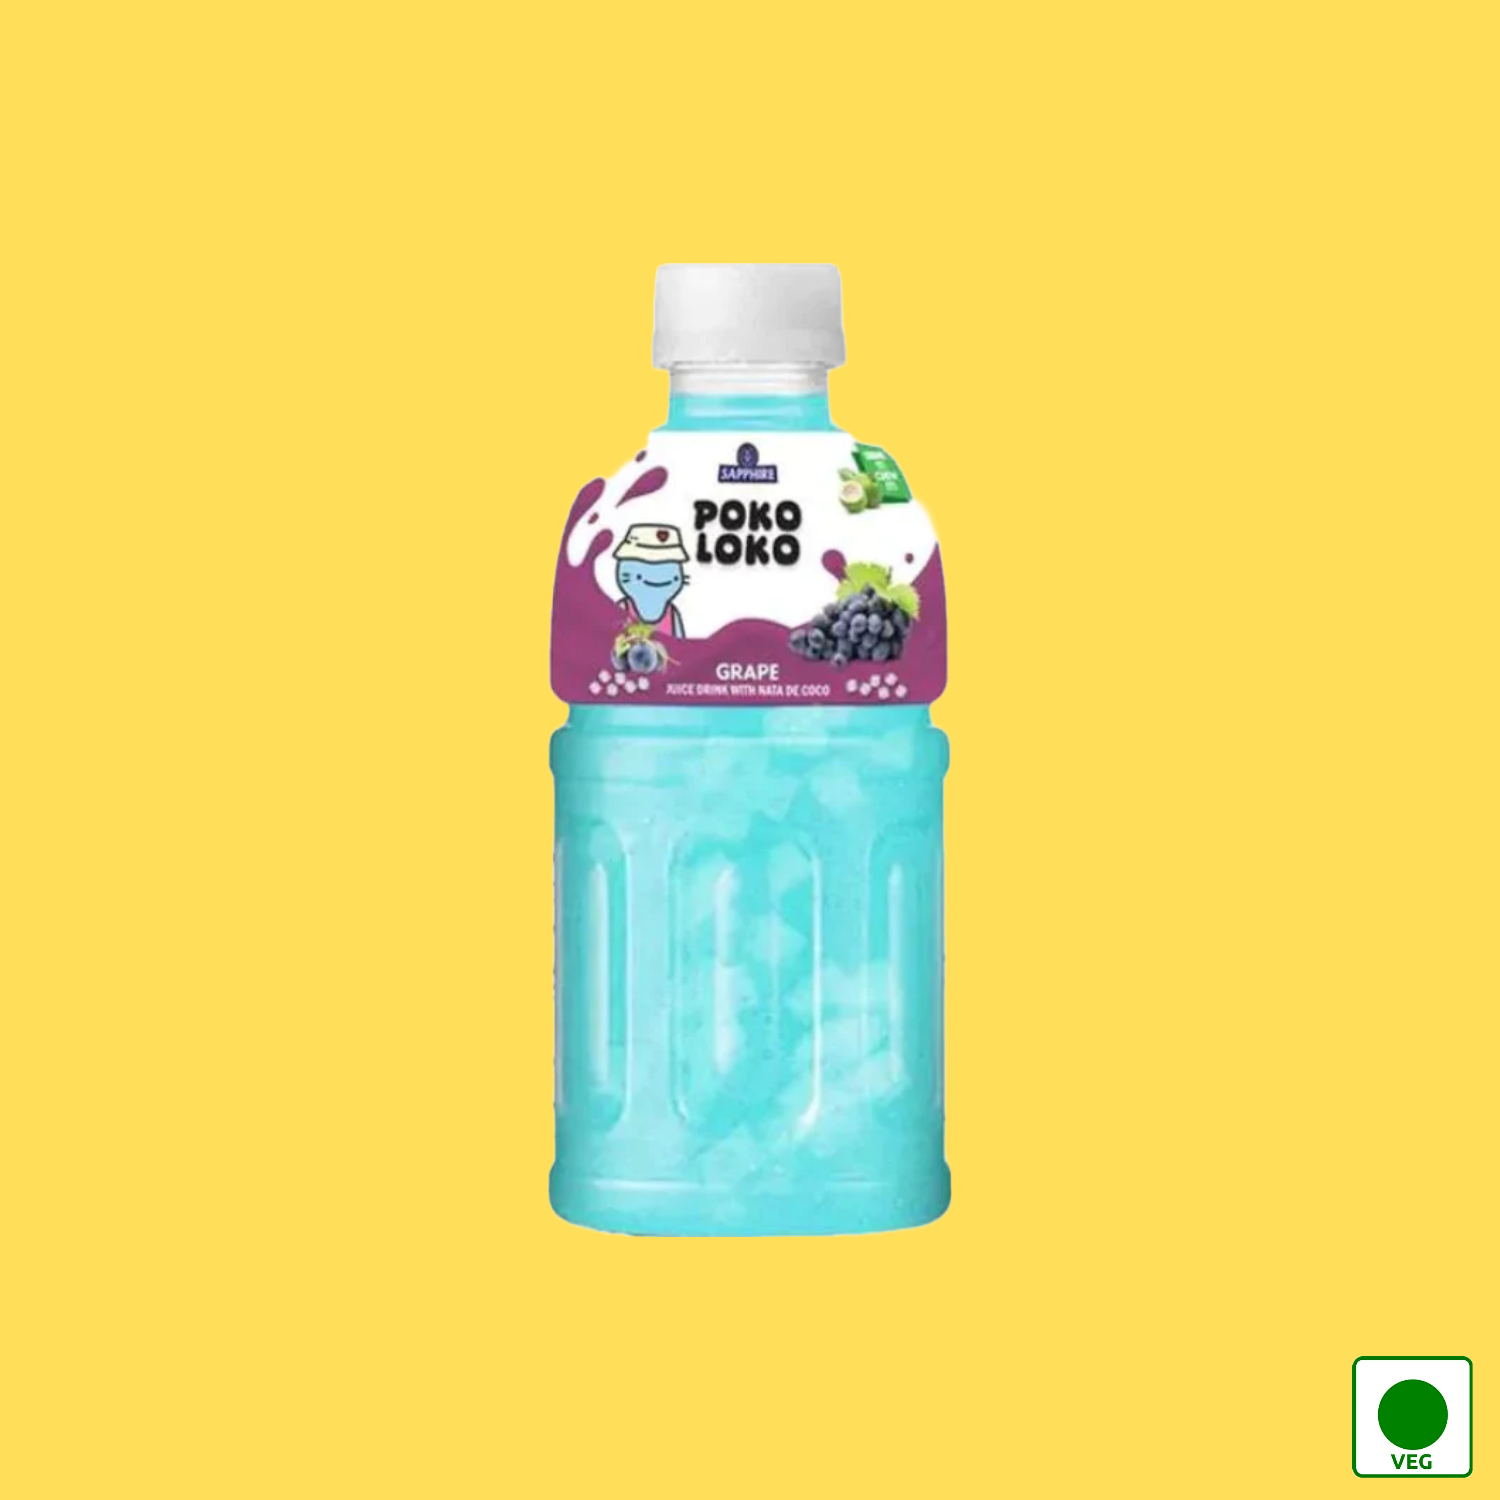 Sapphire Poko Loko Grape Flavoured Juice Drink With Nata De Coco, 300ml (Imported)